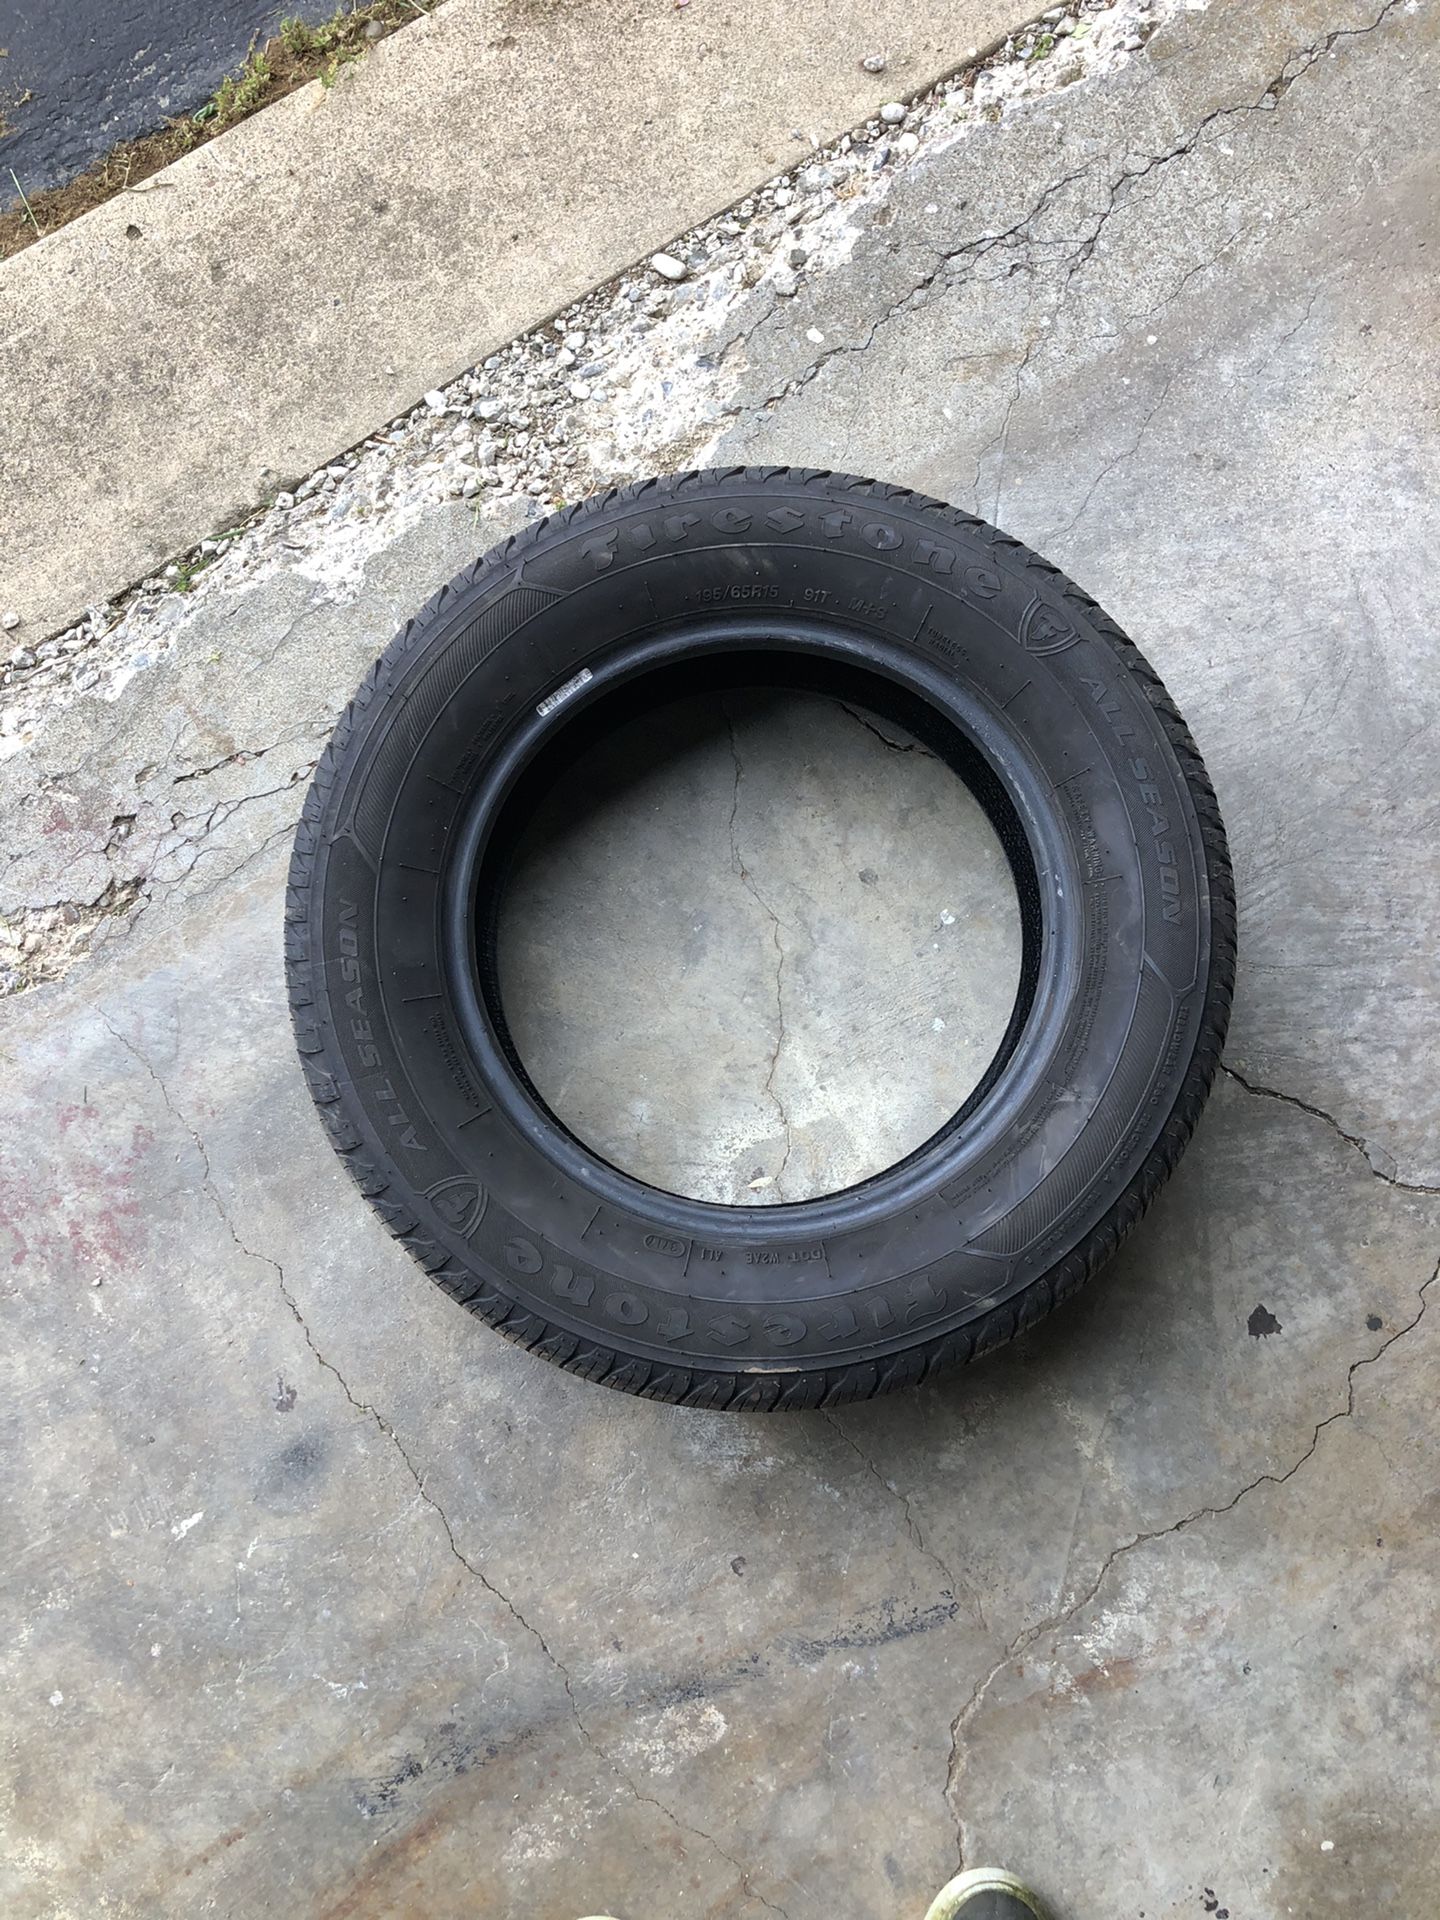 Set of 4, 195/65/15 Firestone tires